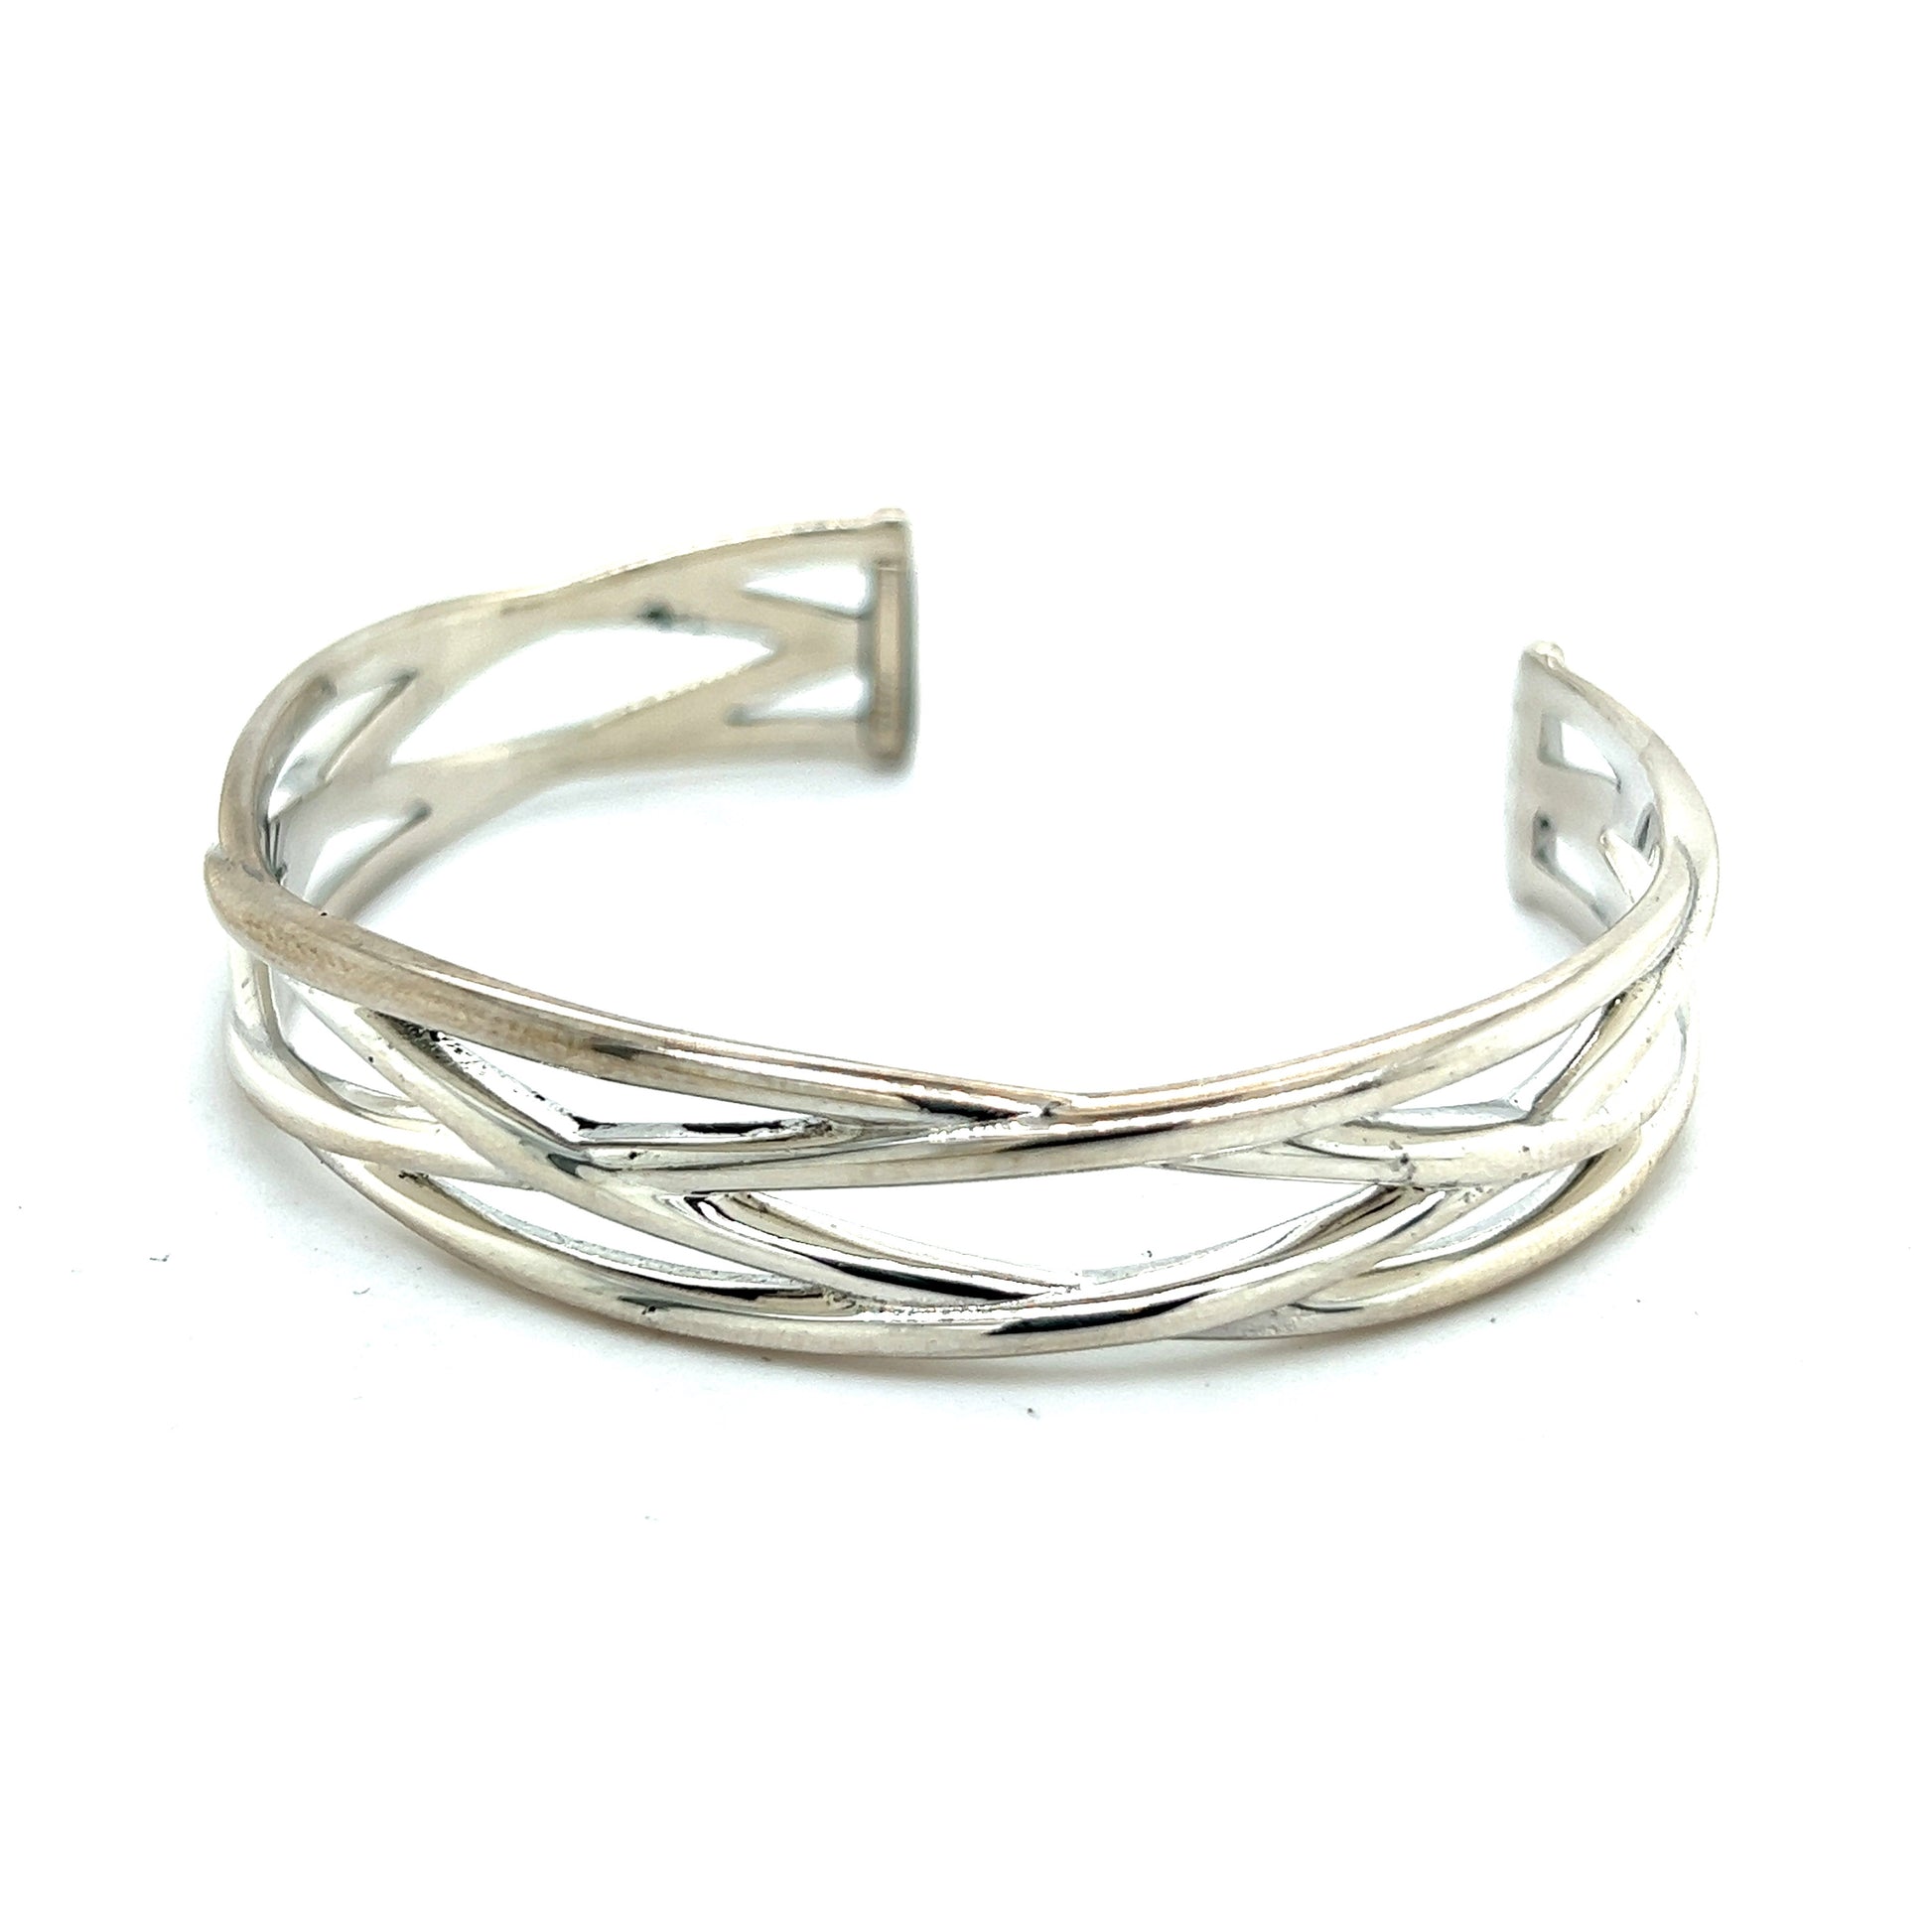 Tiffany & Co Estate Celtic Knot Cuff Italy Bracelet 7.5" Medium 11 mm Silver TIF363 - Certified Fine Jewelry